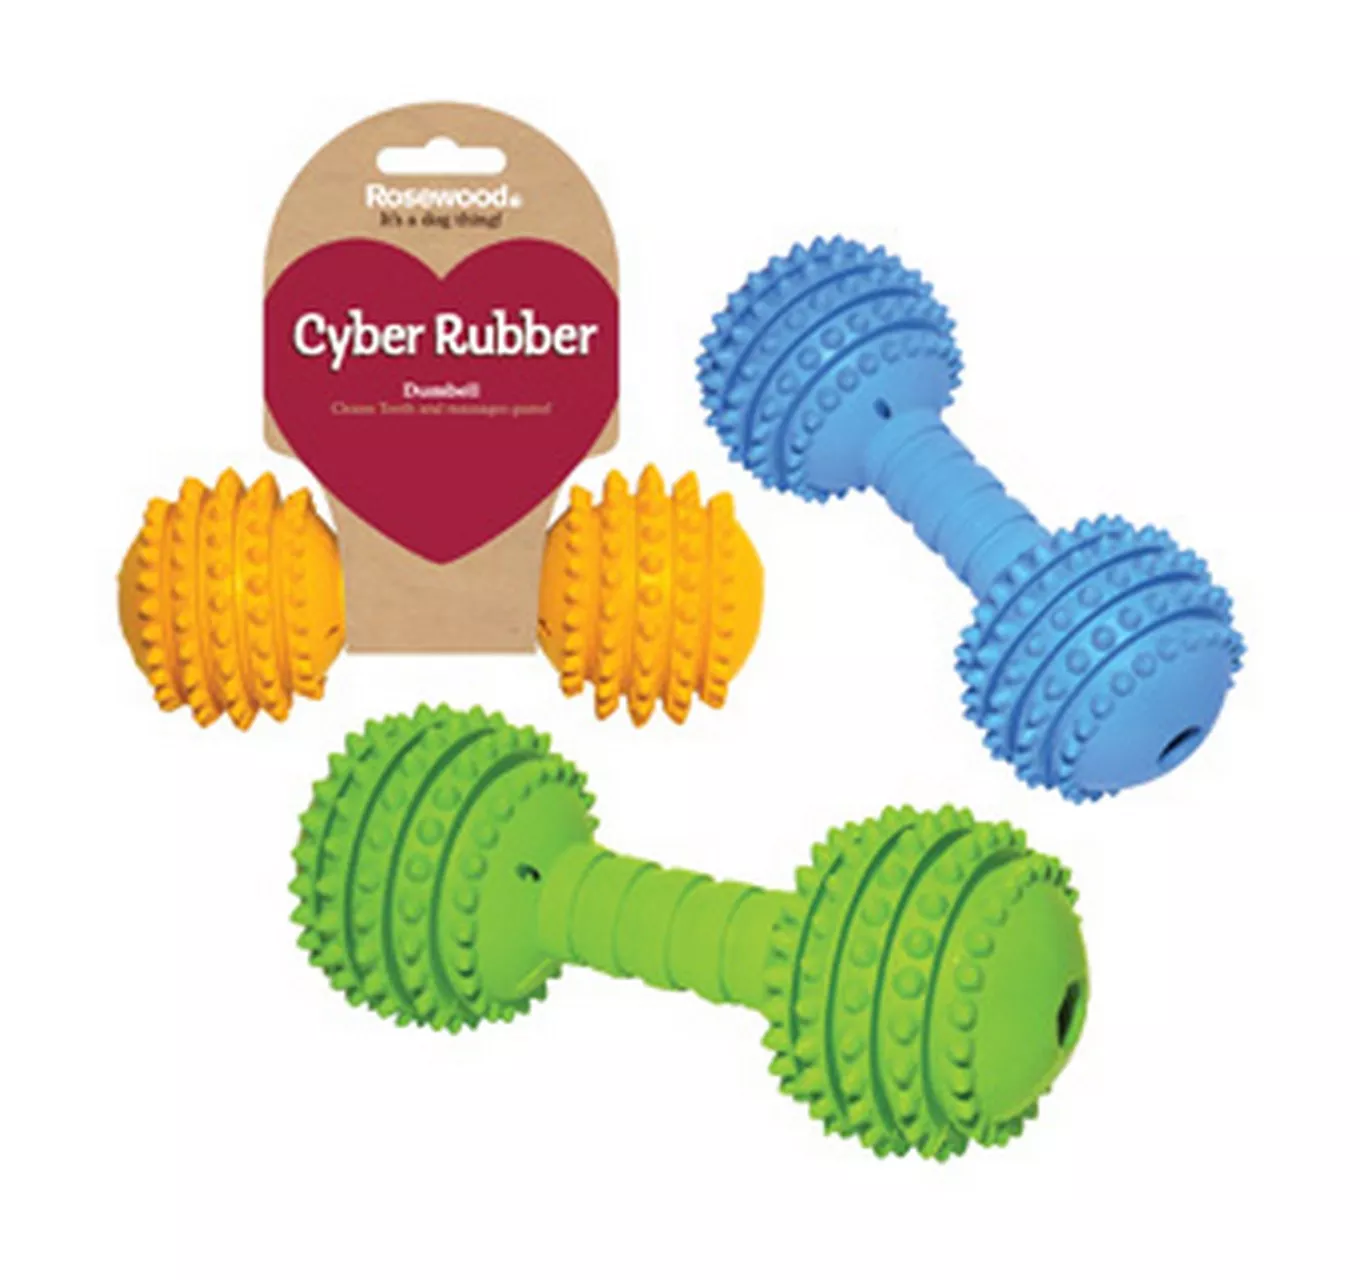 Cyber Rubber Dumbell (M) Each